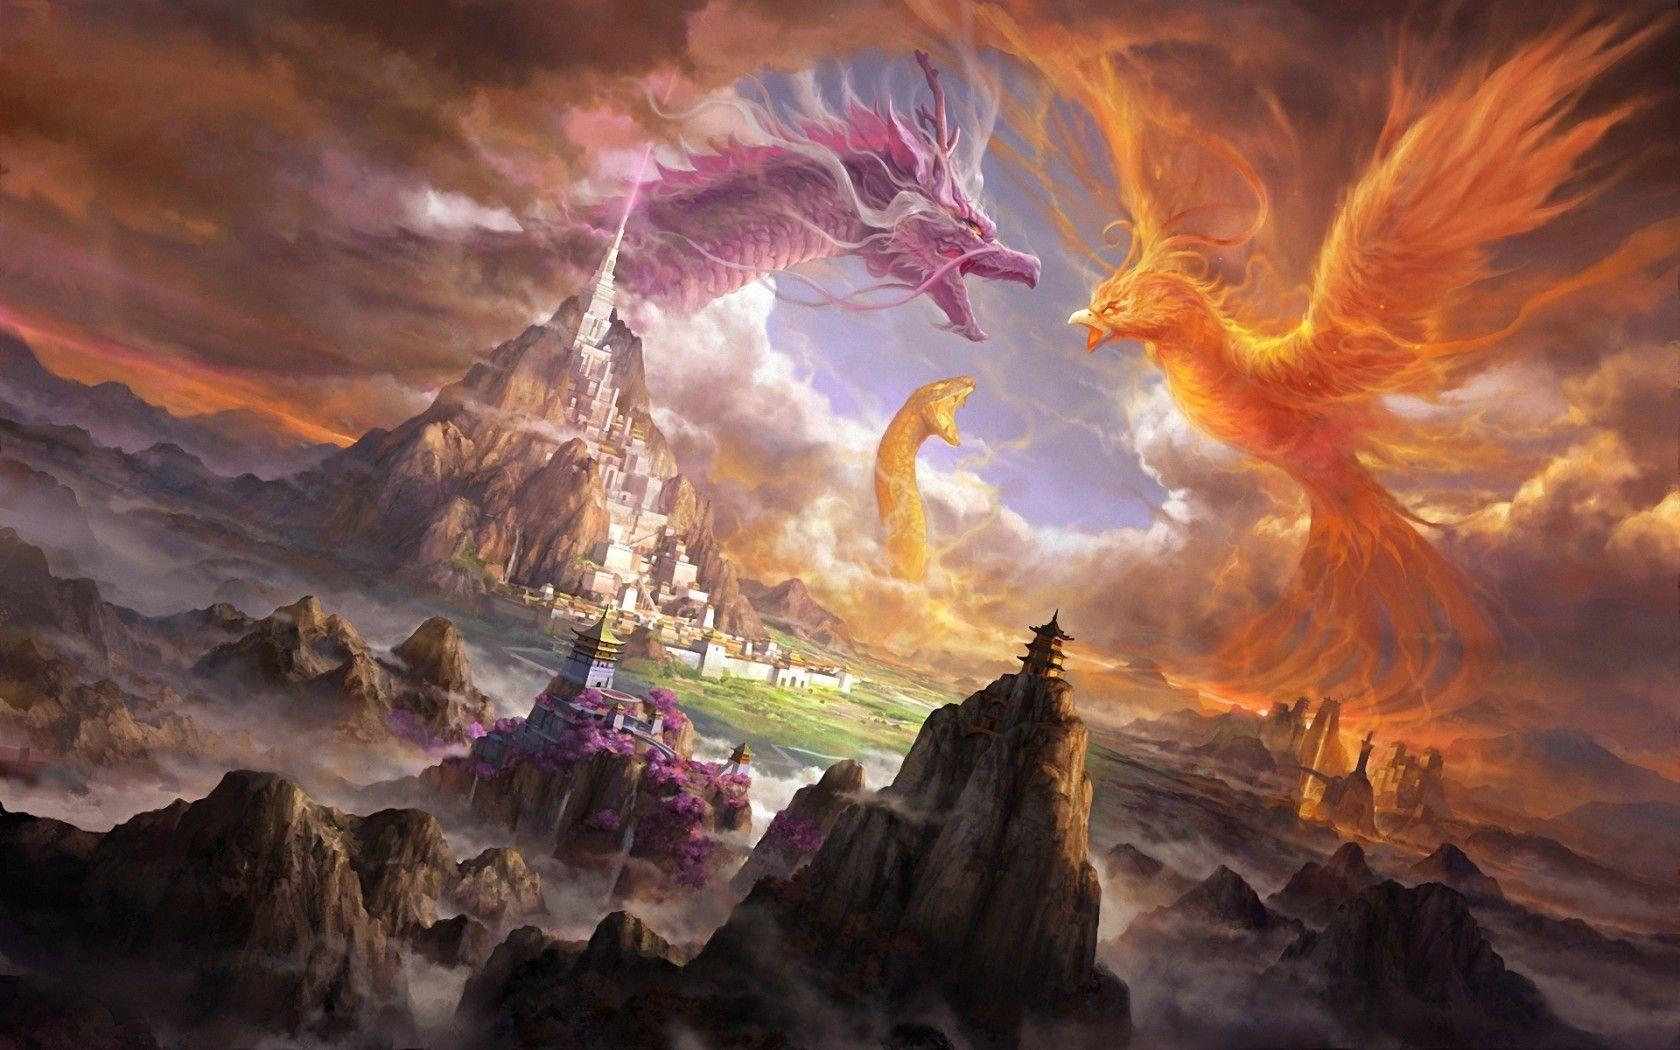 dragons, phoenix, fight, fantasy art, artwork, mythology, Fenix